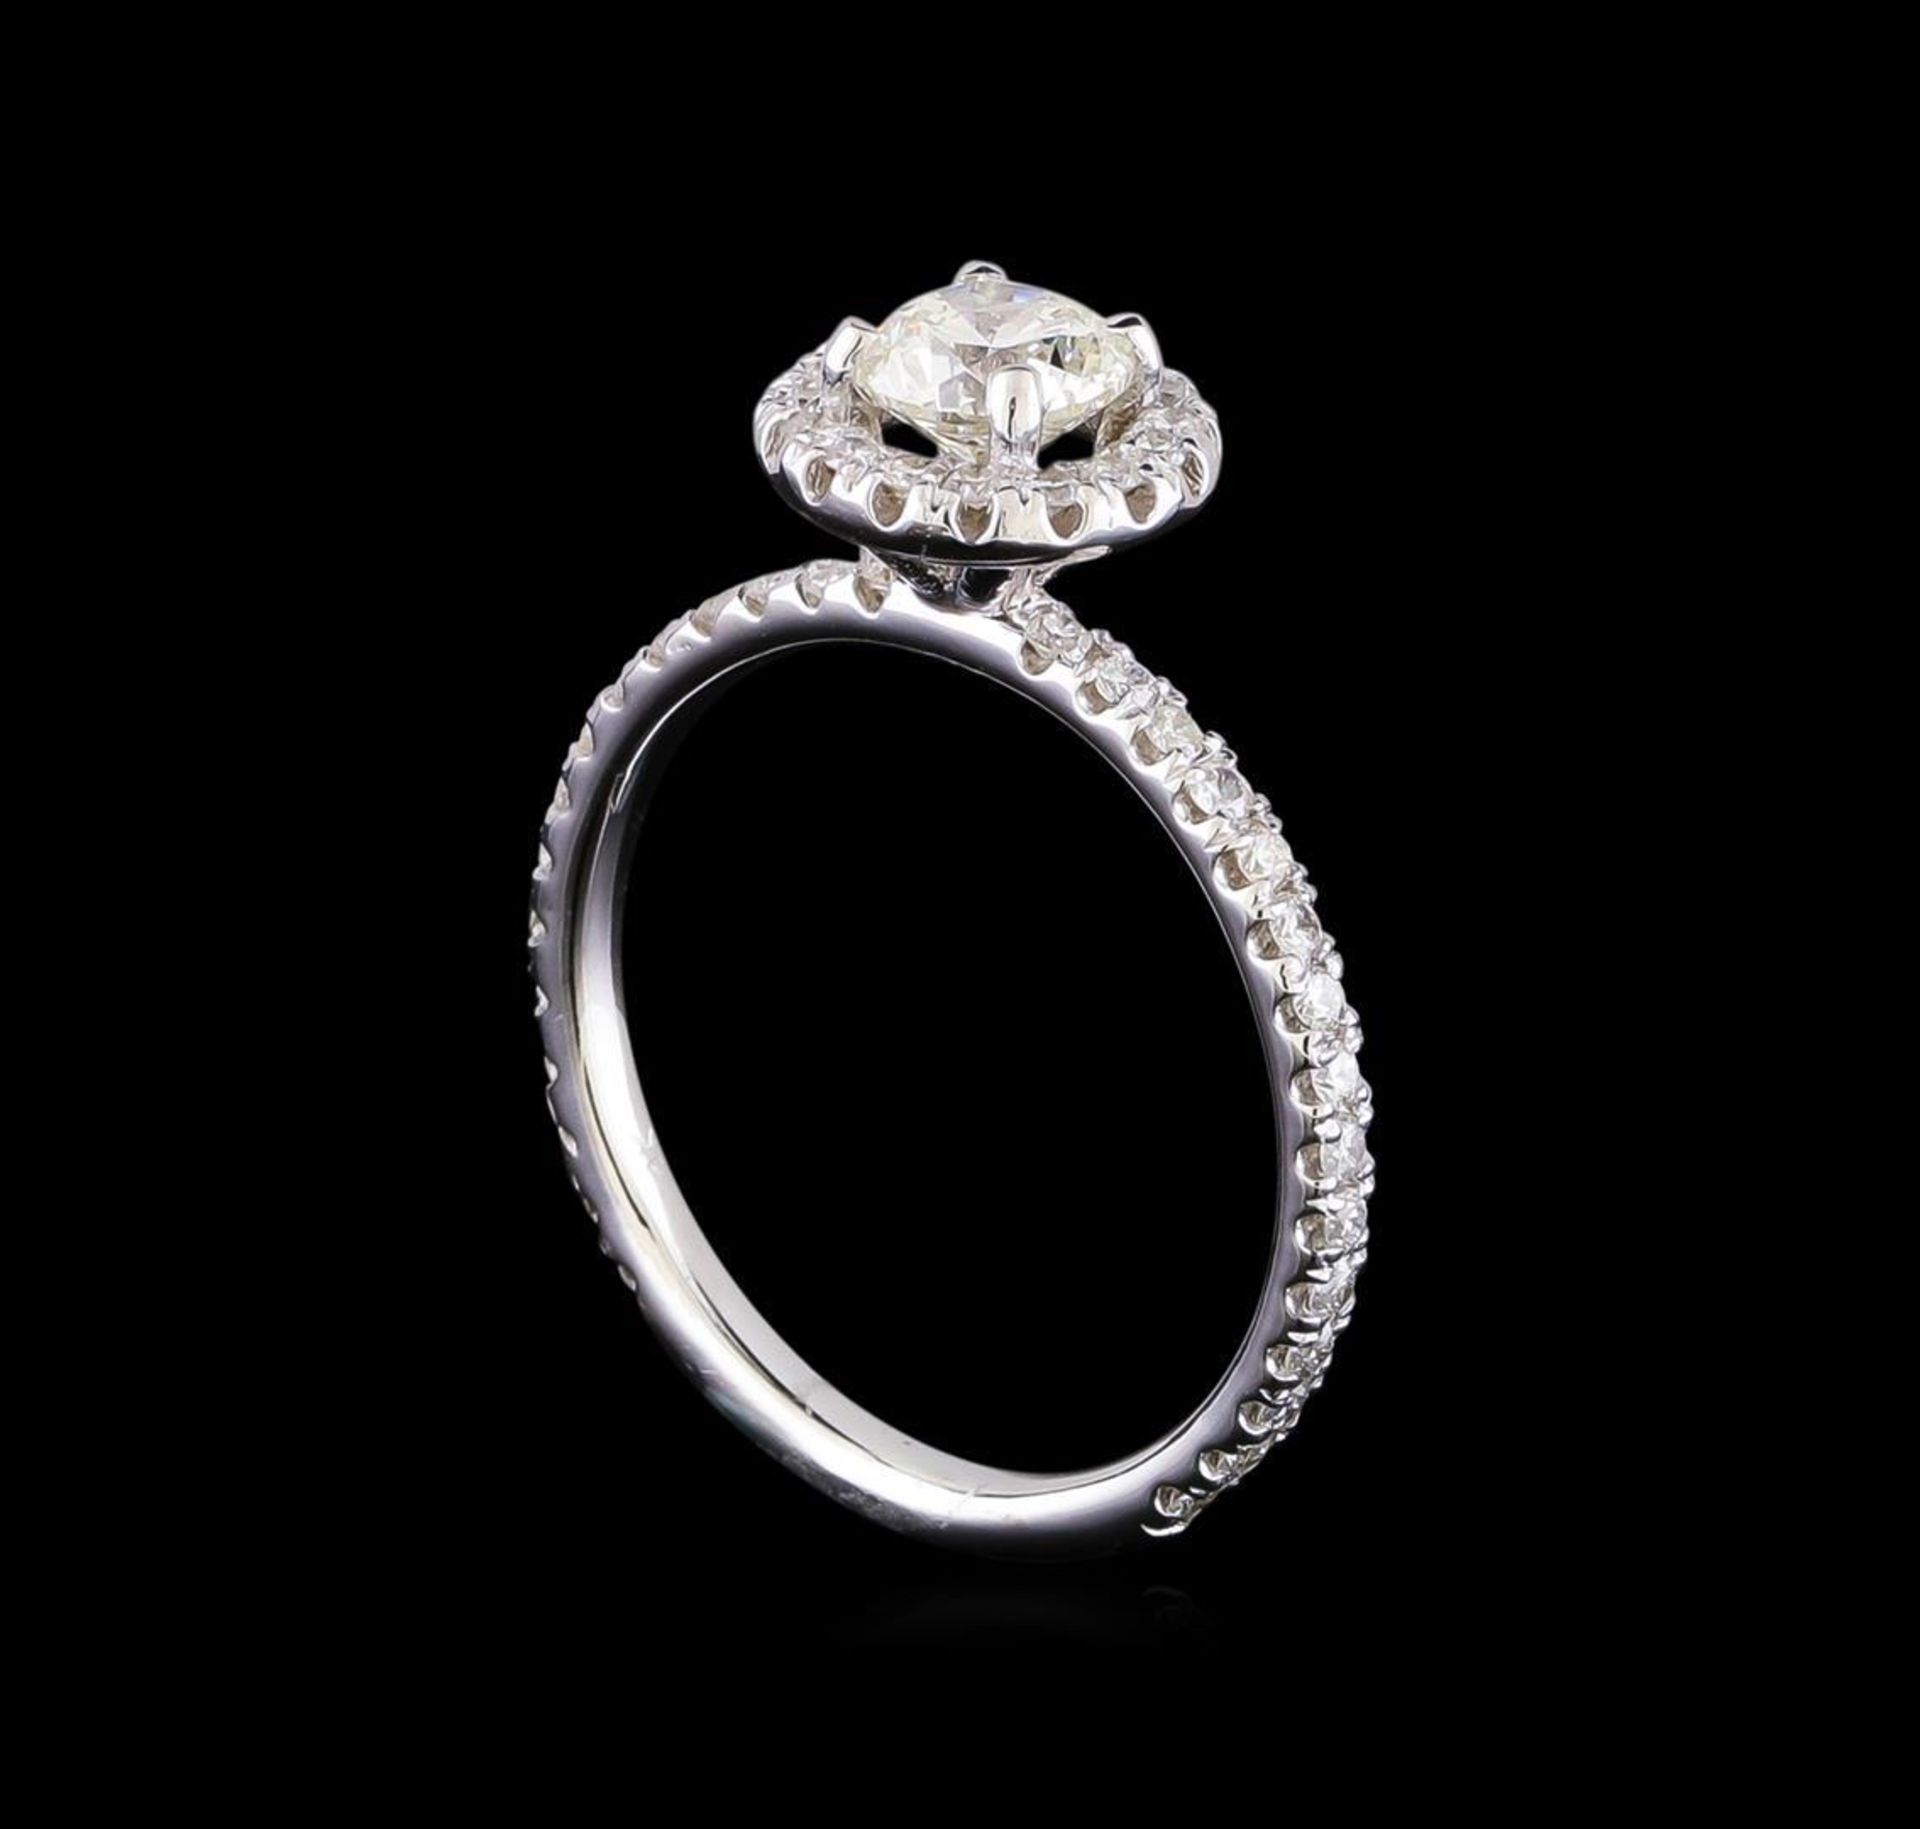 1.15 ctw Diamond Ring - 14KT White Gold - Image 4 of 5